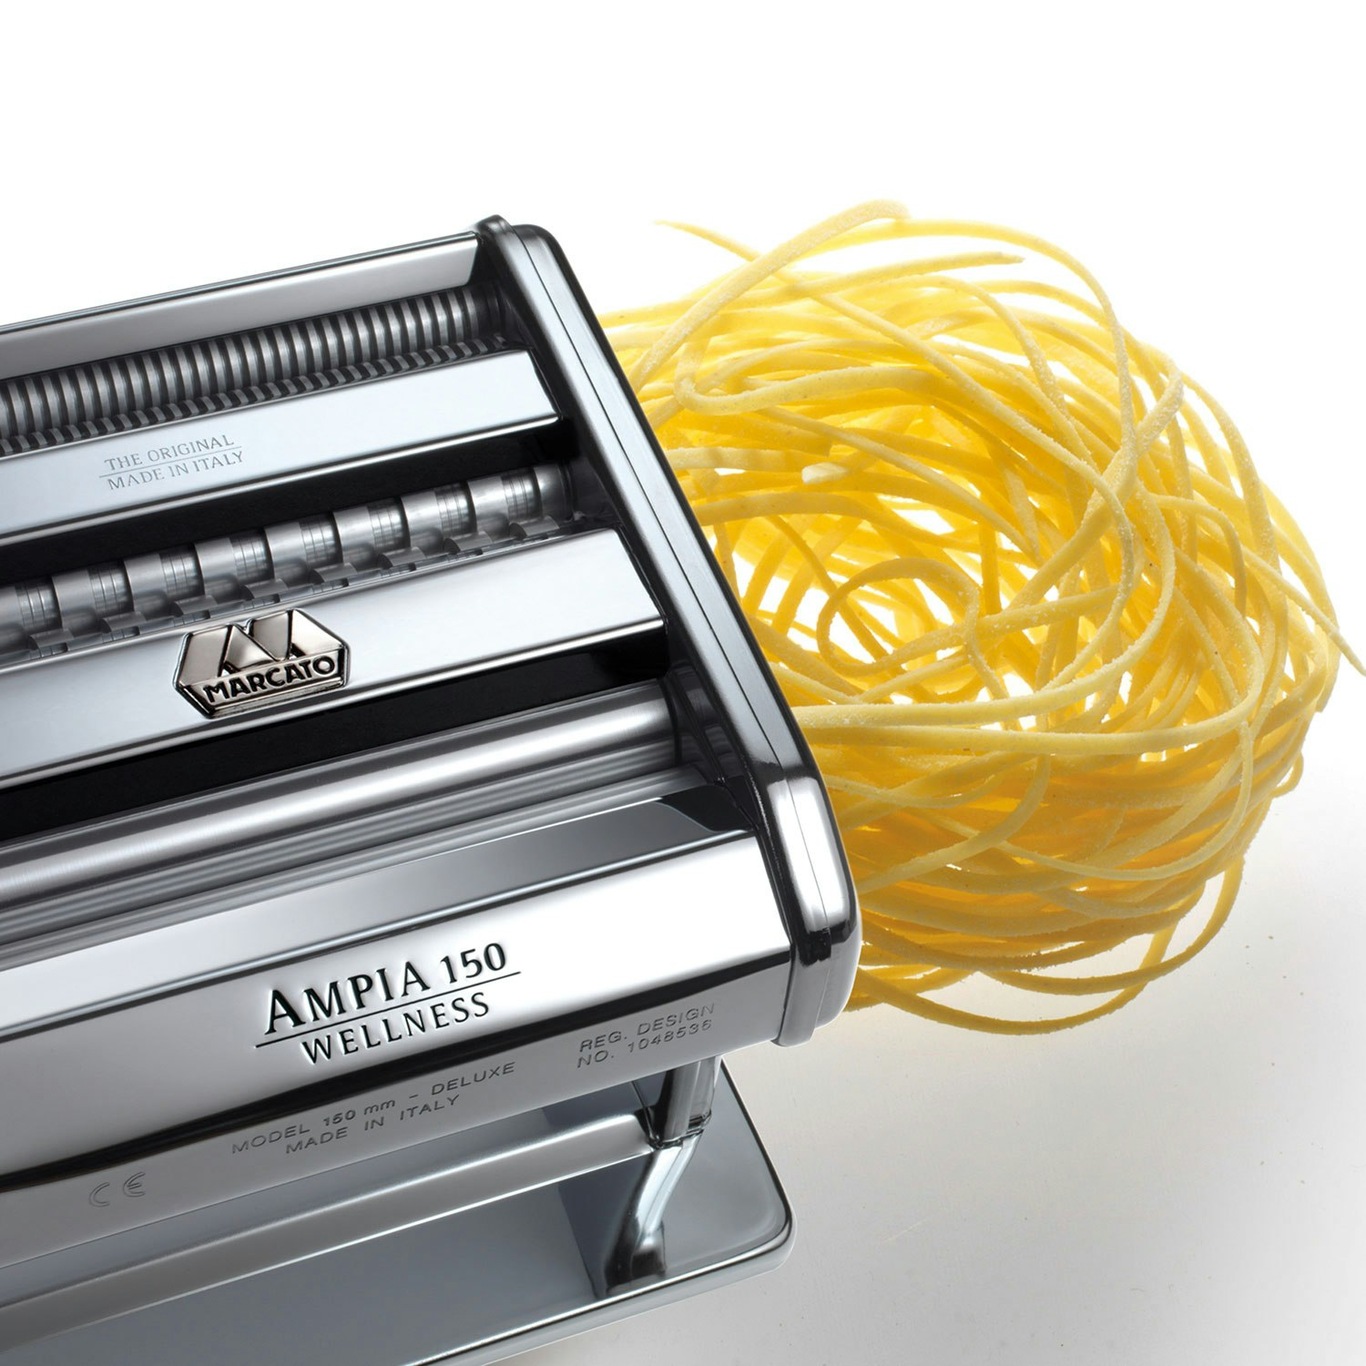 https://royaldesign.com/image/2/marcato-ampia-180-noodle-machine-stainless-1?w=800&quality=80